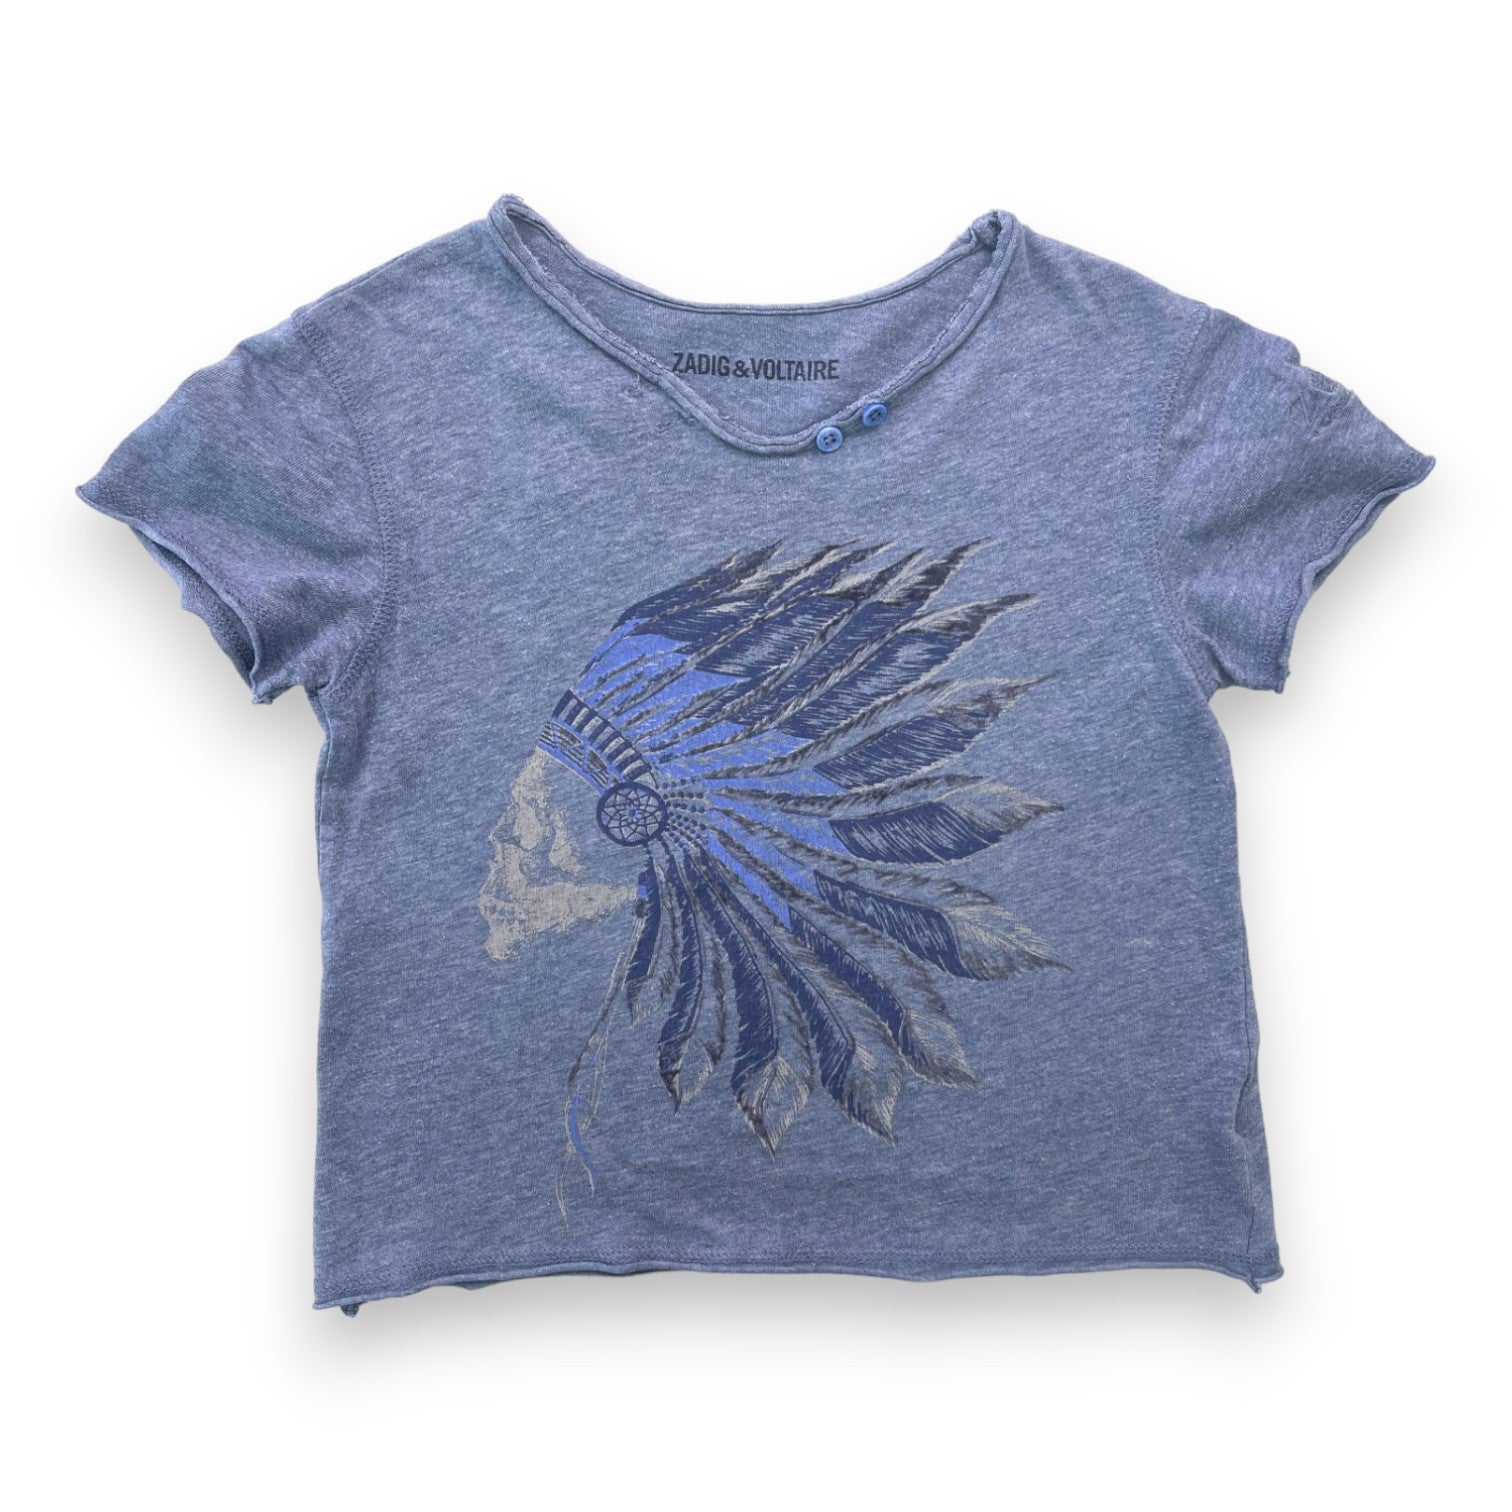 ZADIG & VOLTAIRE - T shirt bleu motif coiffe d'indien - 4 ans